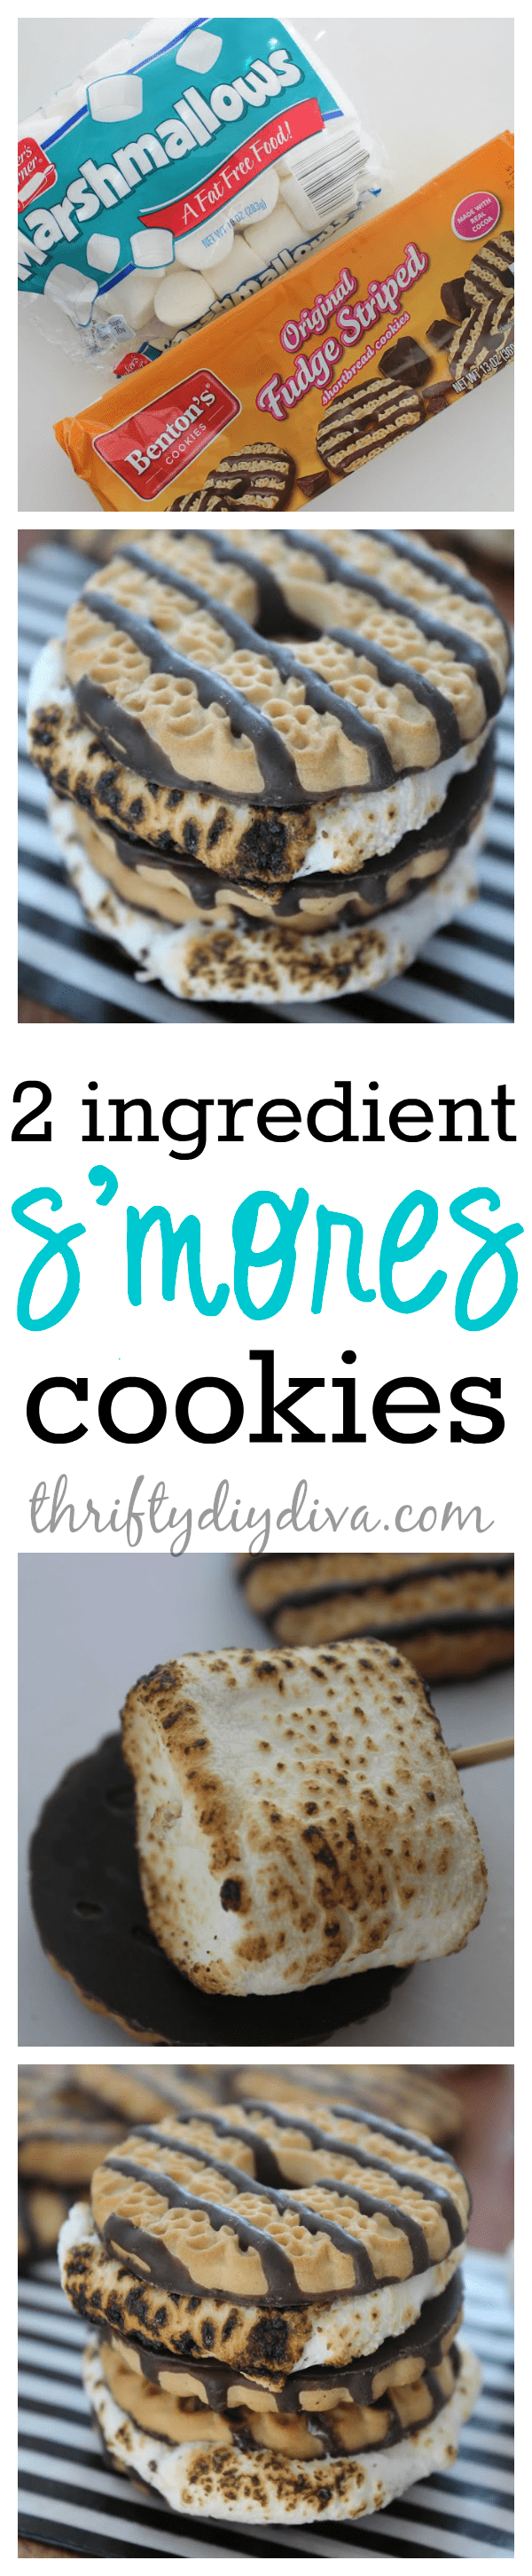 2 Ingredient S'mores Cookies Recipe